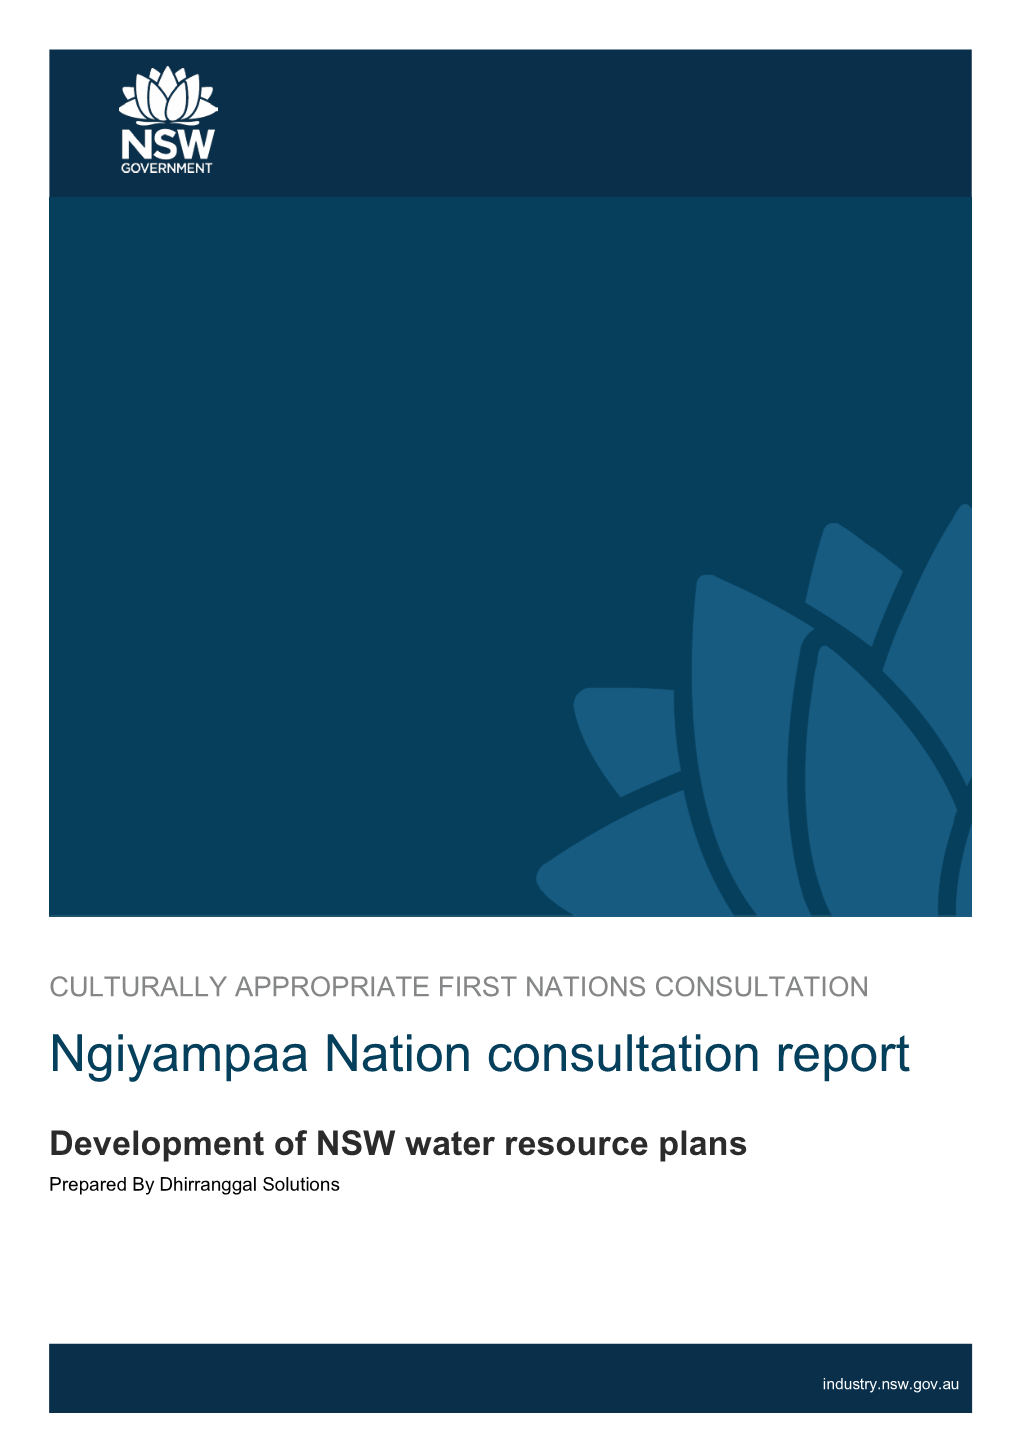 Ngiyampaa Nation Consultation Report